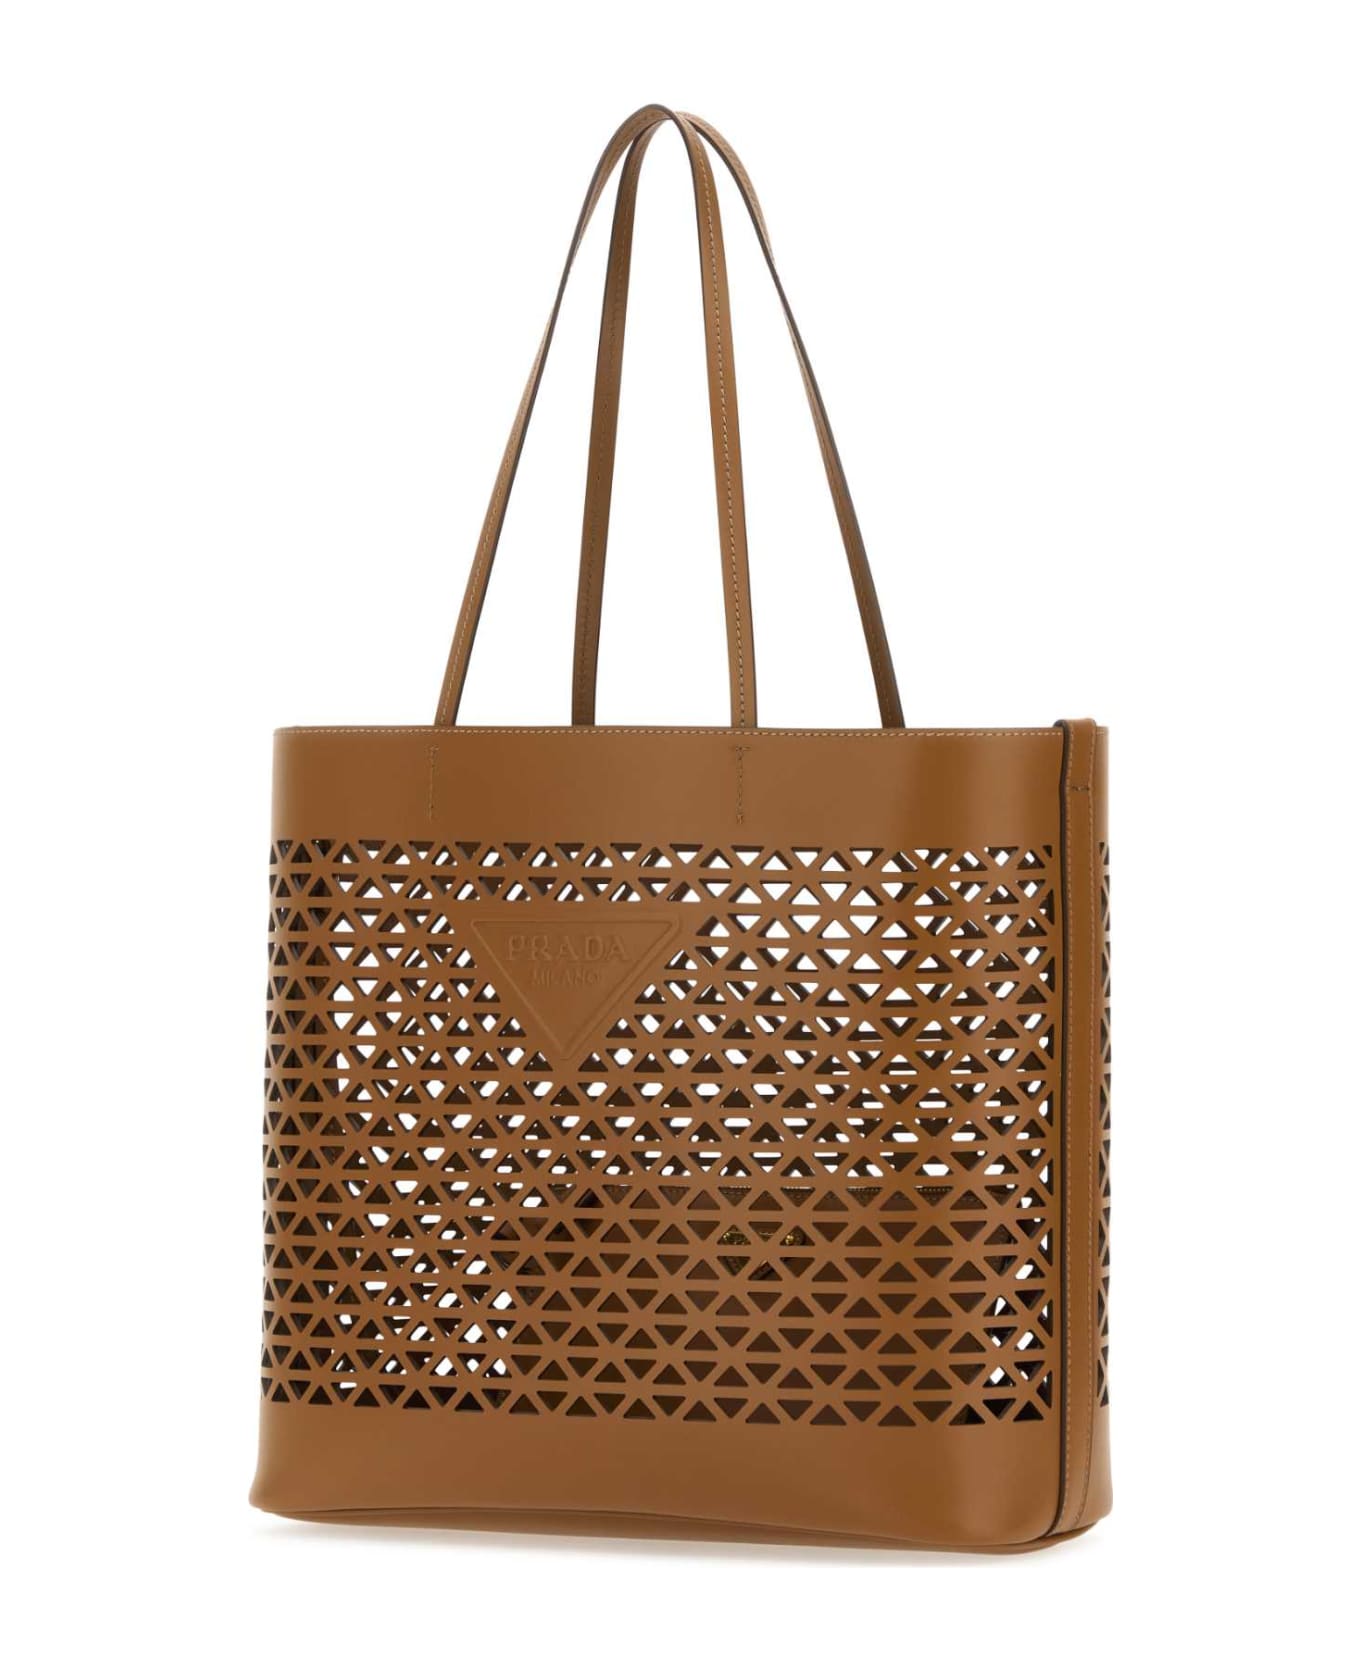 Prada Caramel Leather Shopping Bag - CARAMEL0 トートバッグ